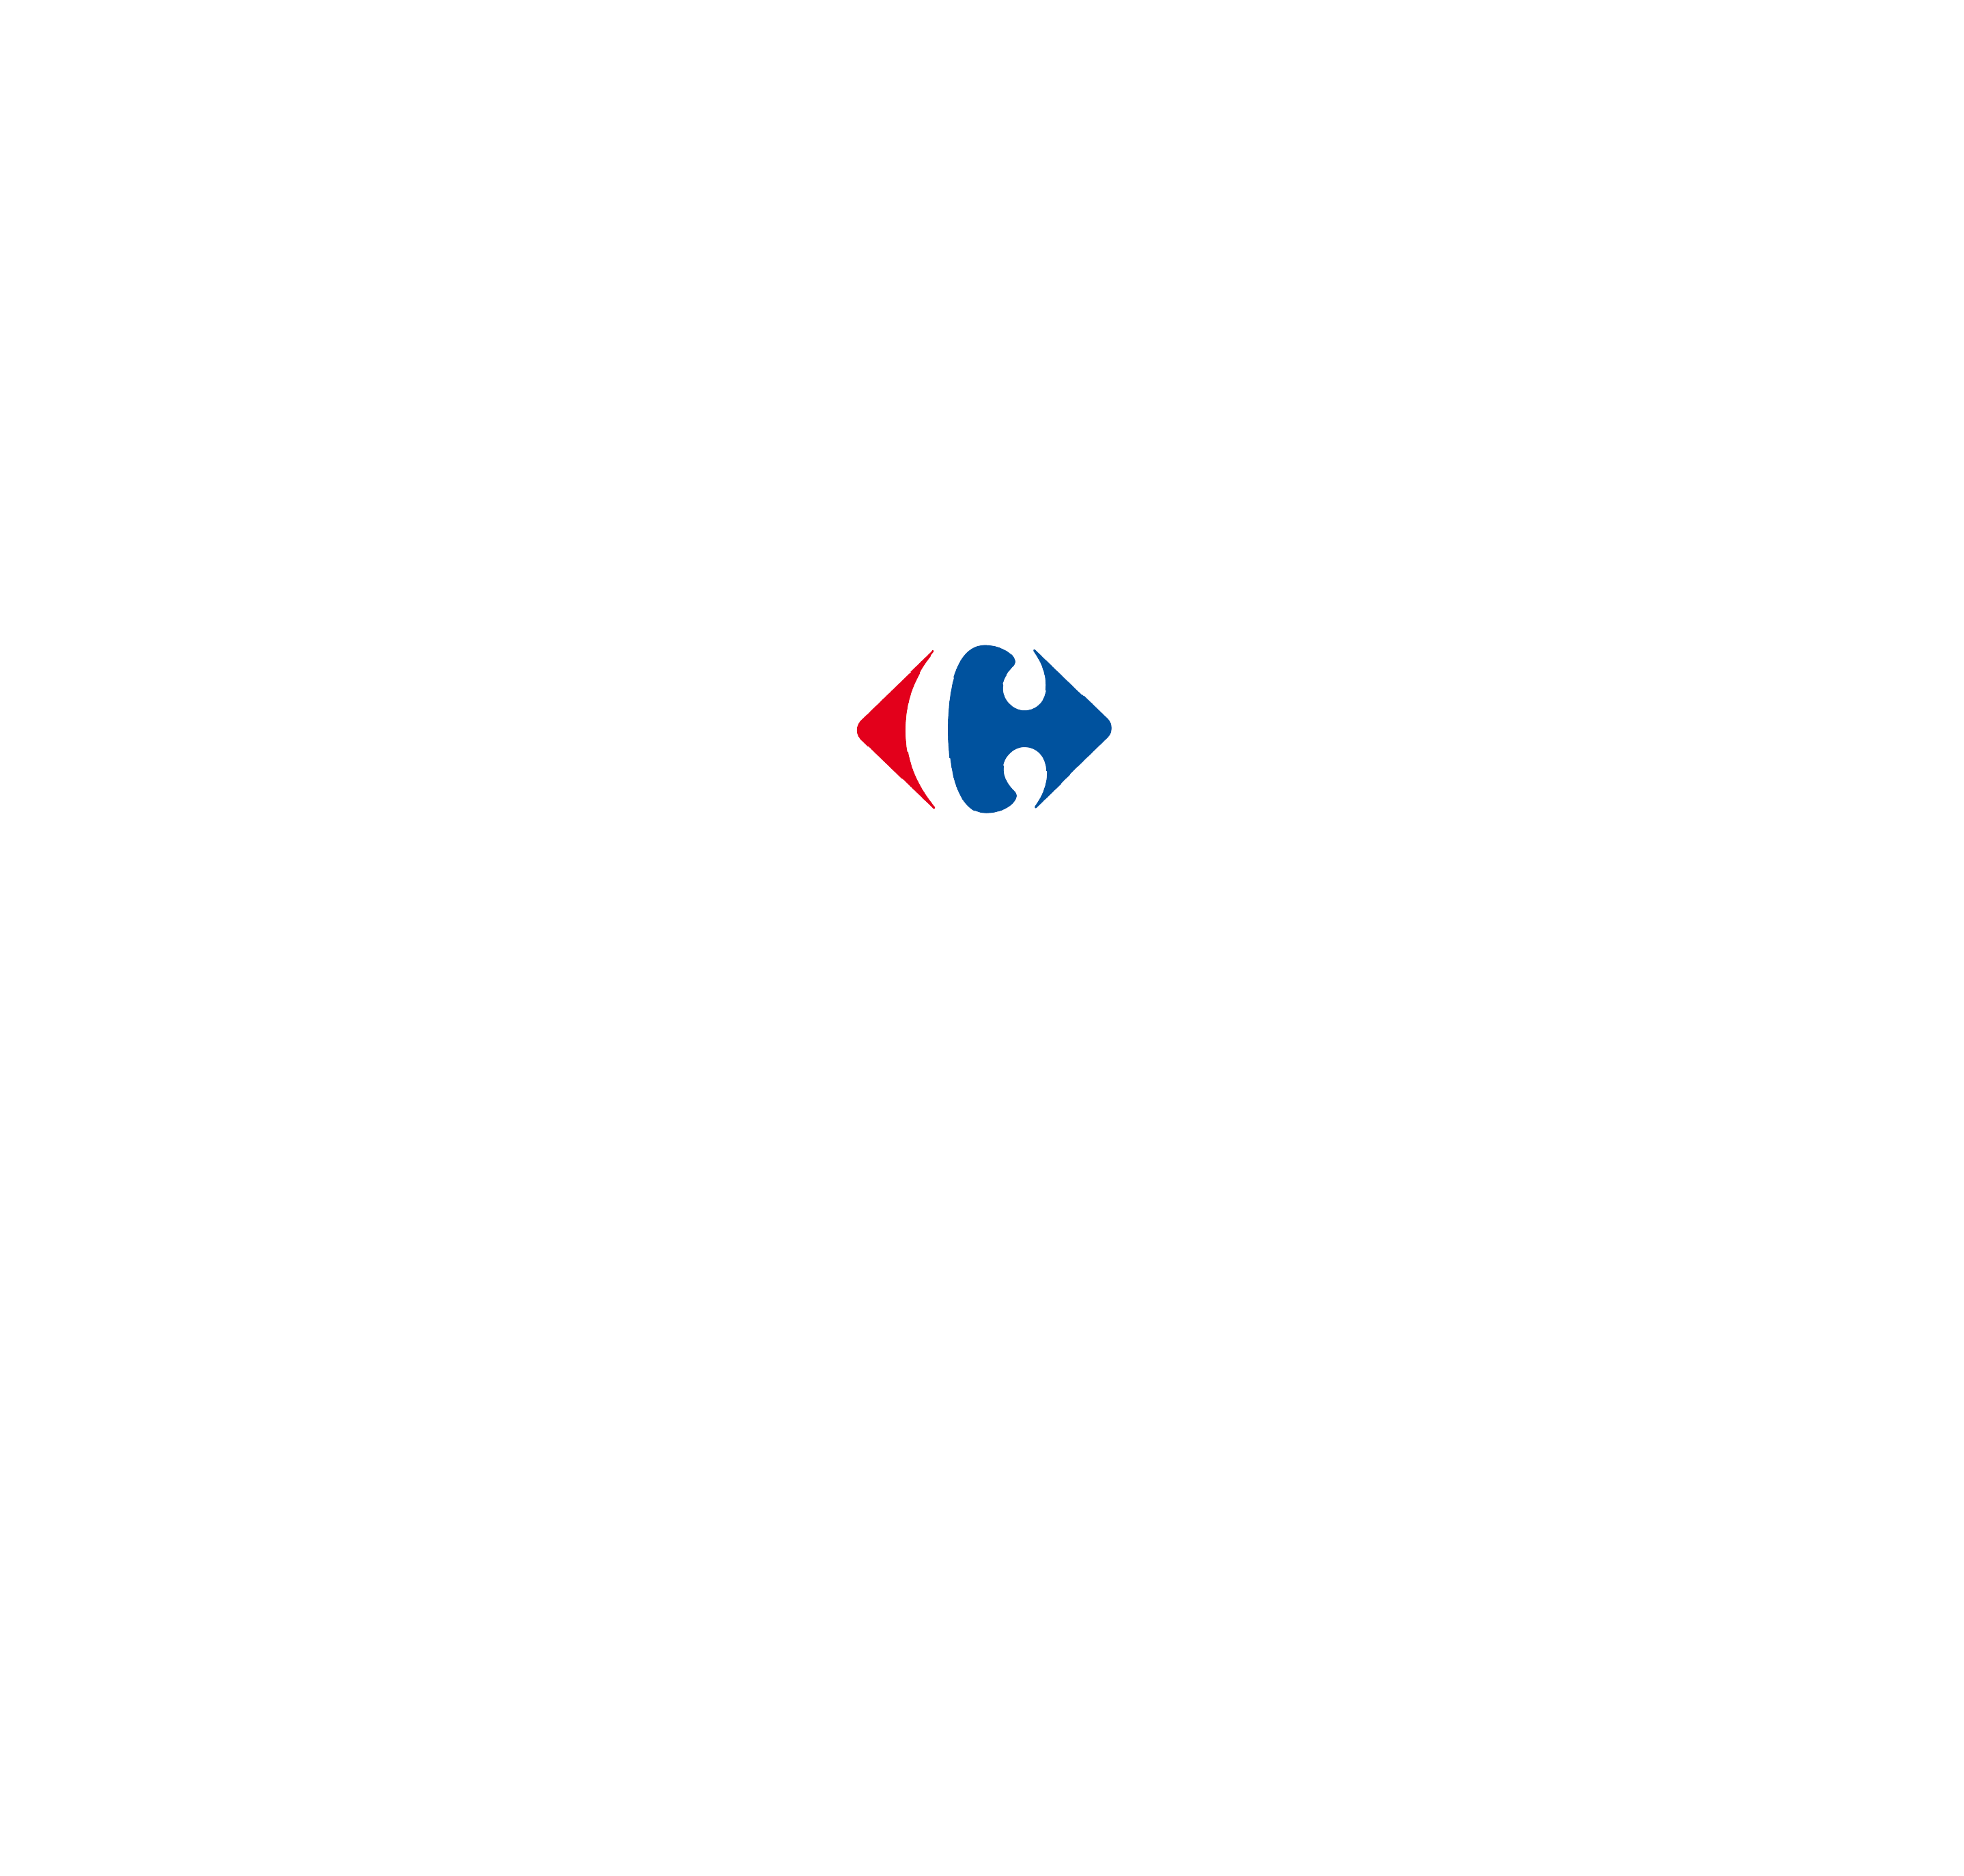 Let's Emerge Award 2018 Logo